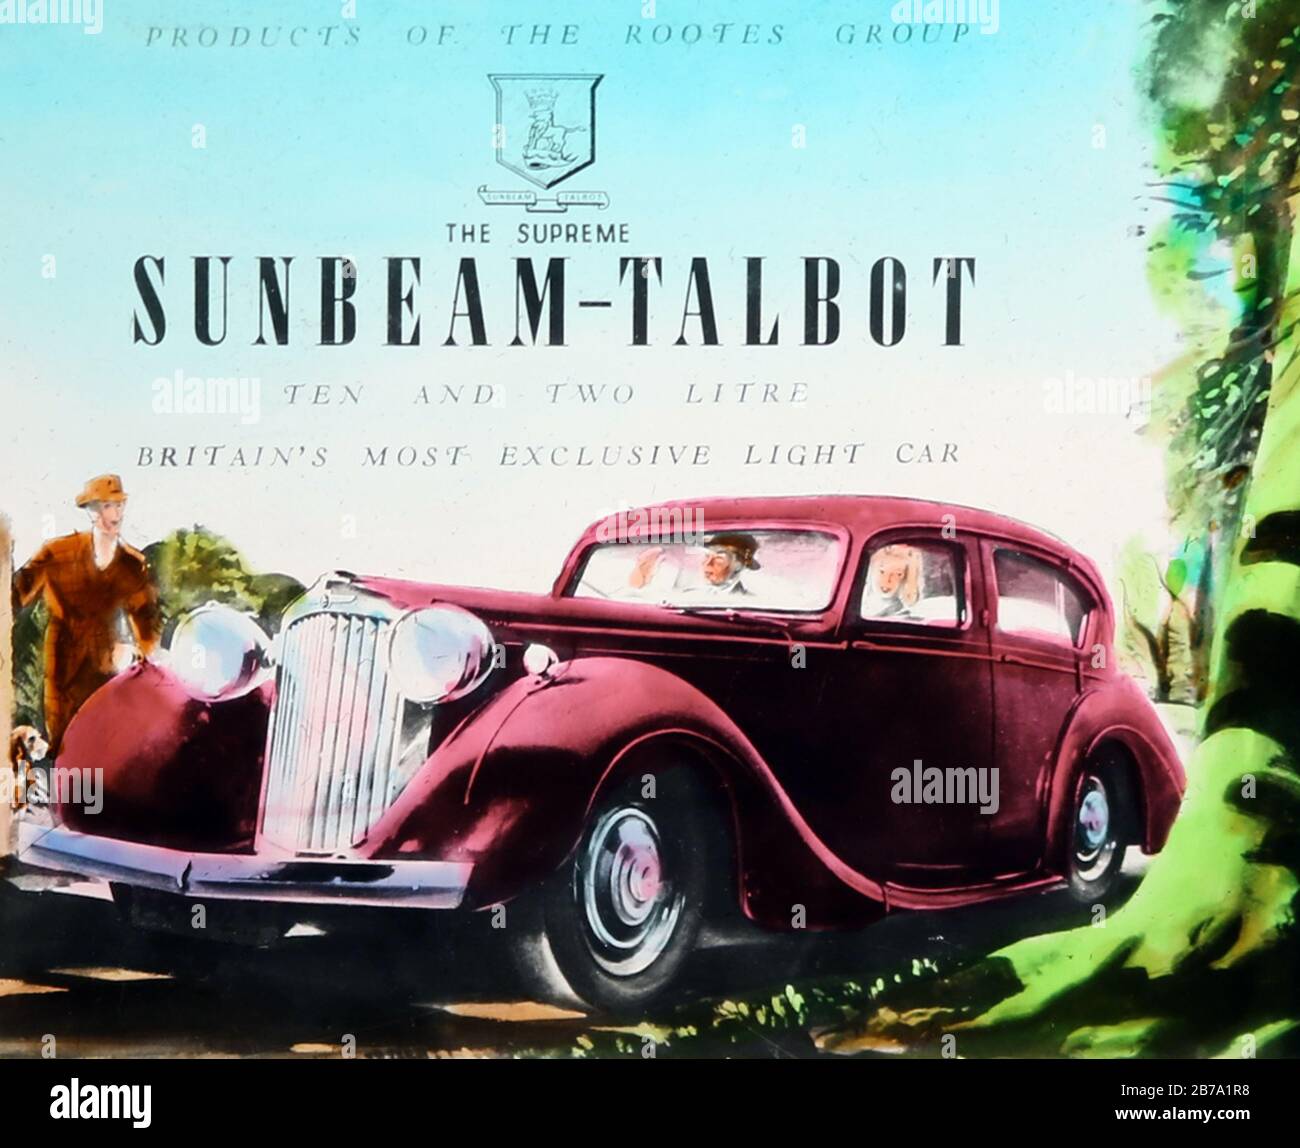 Sunbeam Talbot cinema advertisement, probably 1940s Stock Photo